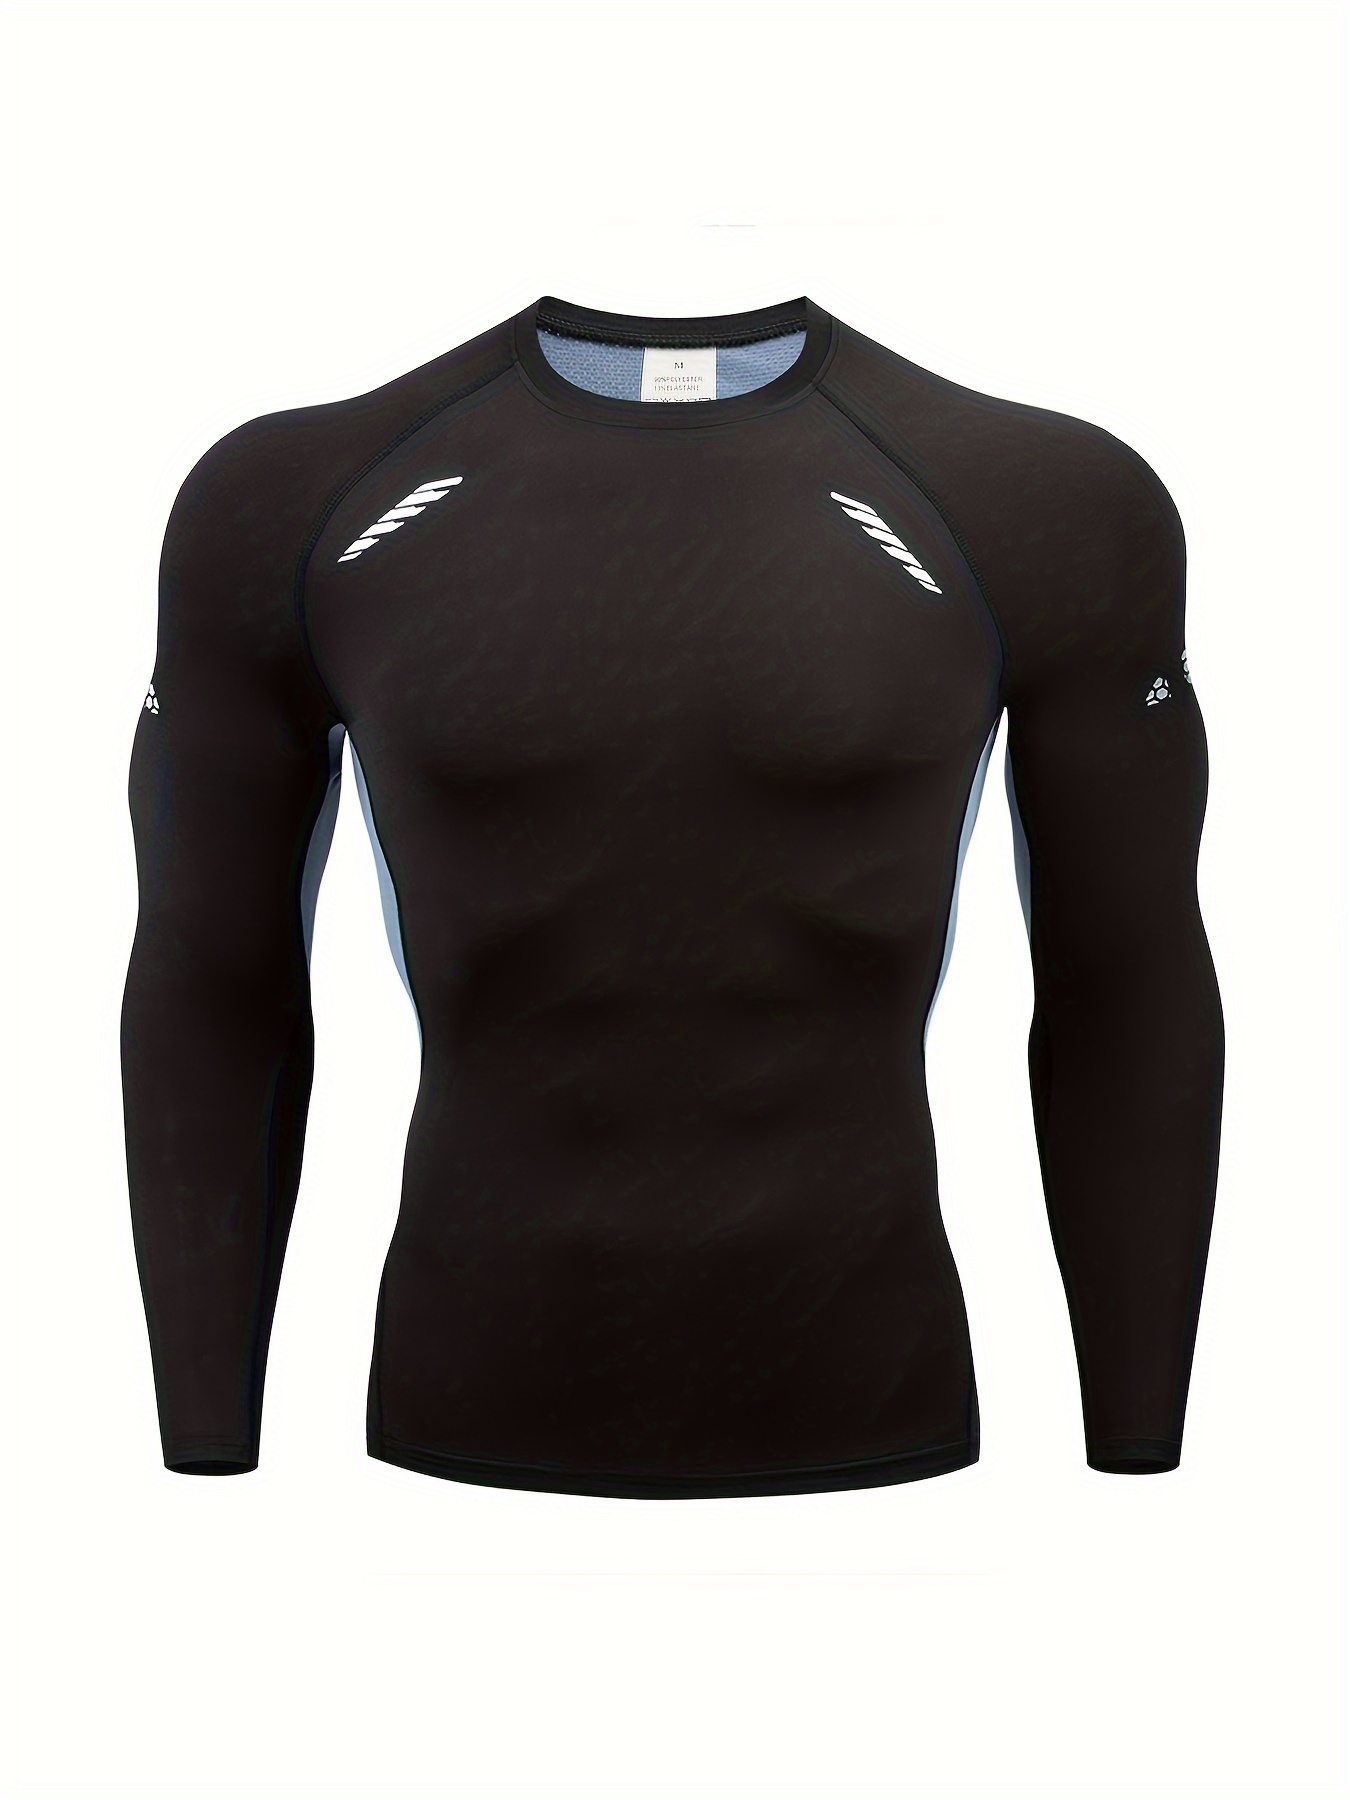 5 Pack Compression Shirts Men Long Sleeve Rash Guard Athletic Baselayer  Undershirt Gear Tshirt for Sports Workout